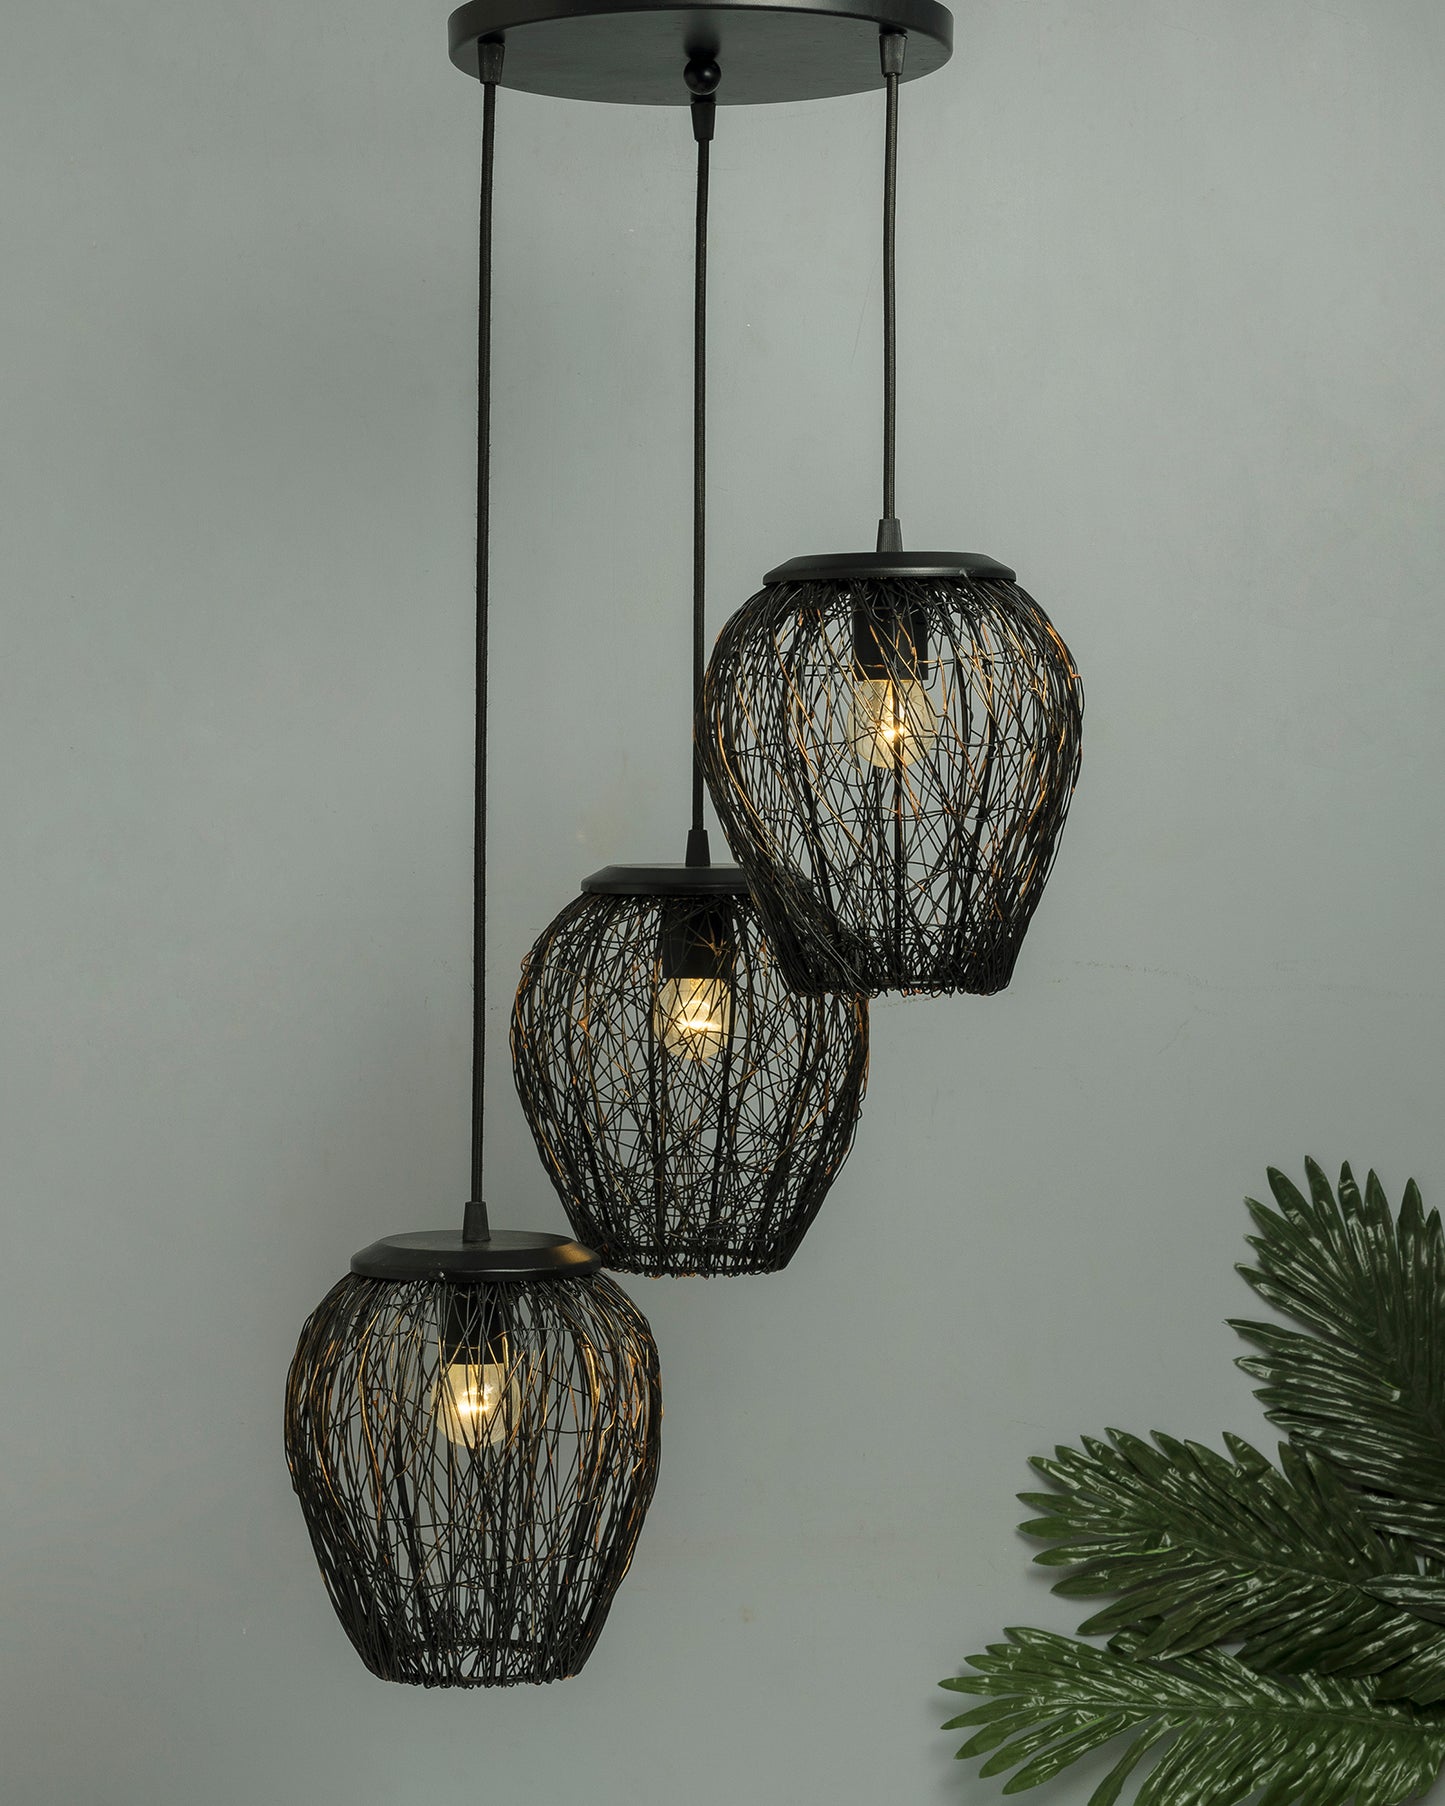 3-Lights Cluster Chandelier Black Steel Wire Mesh Pendant, Decorative, Black, URBAN Retro, Nordic Style, LED/Filament Bulb